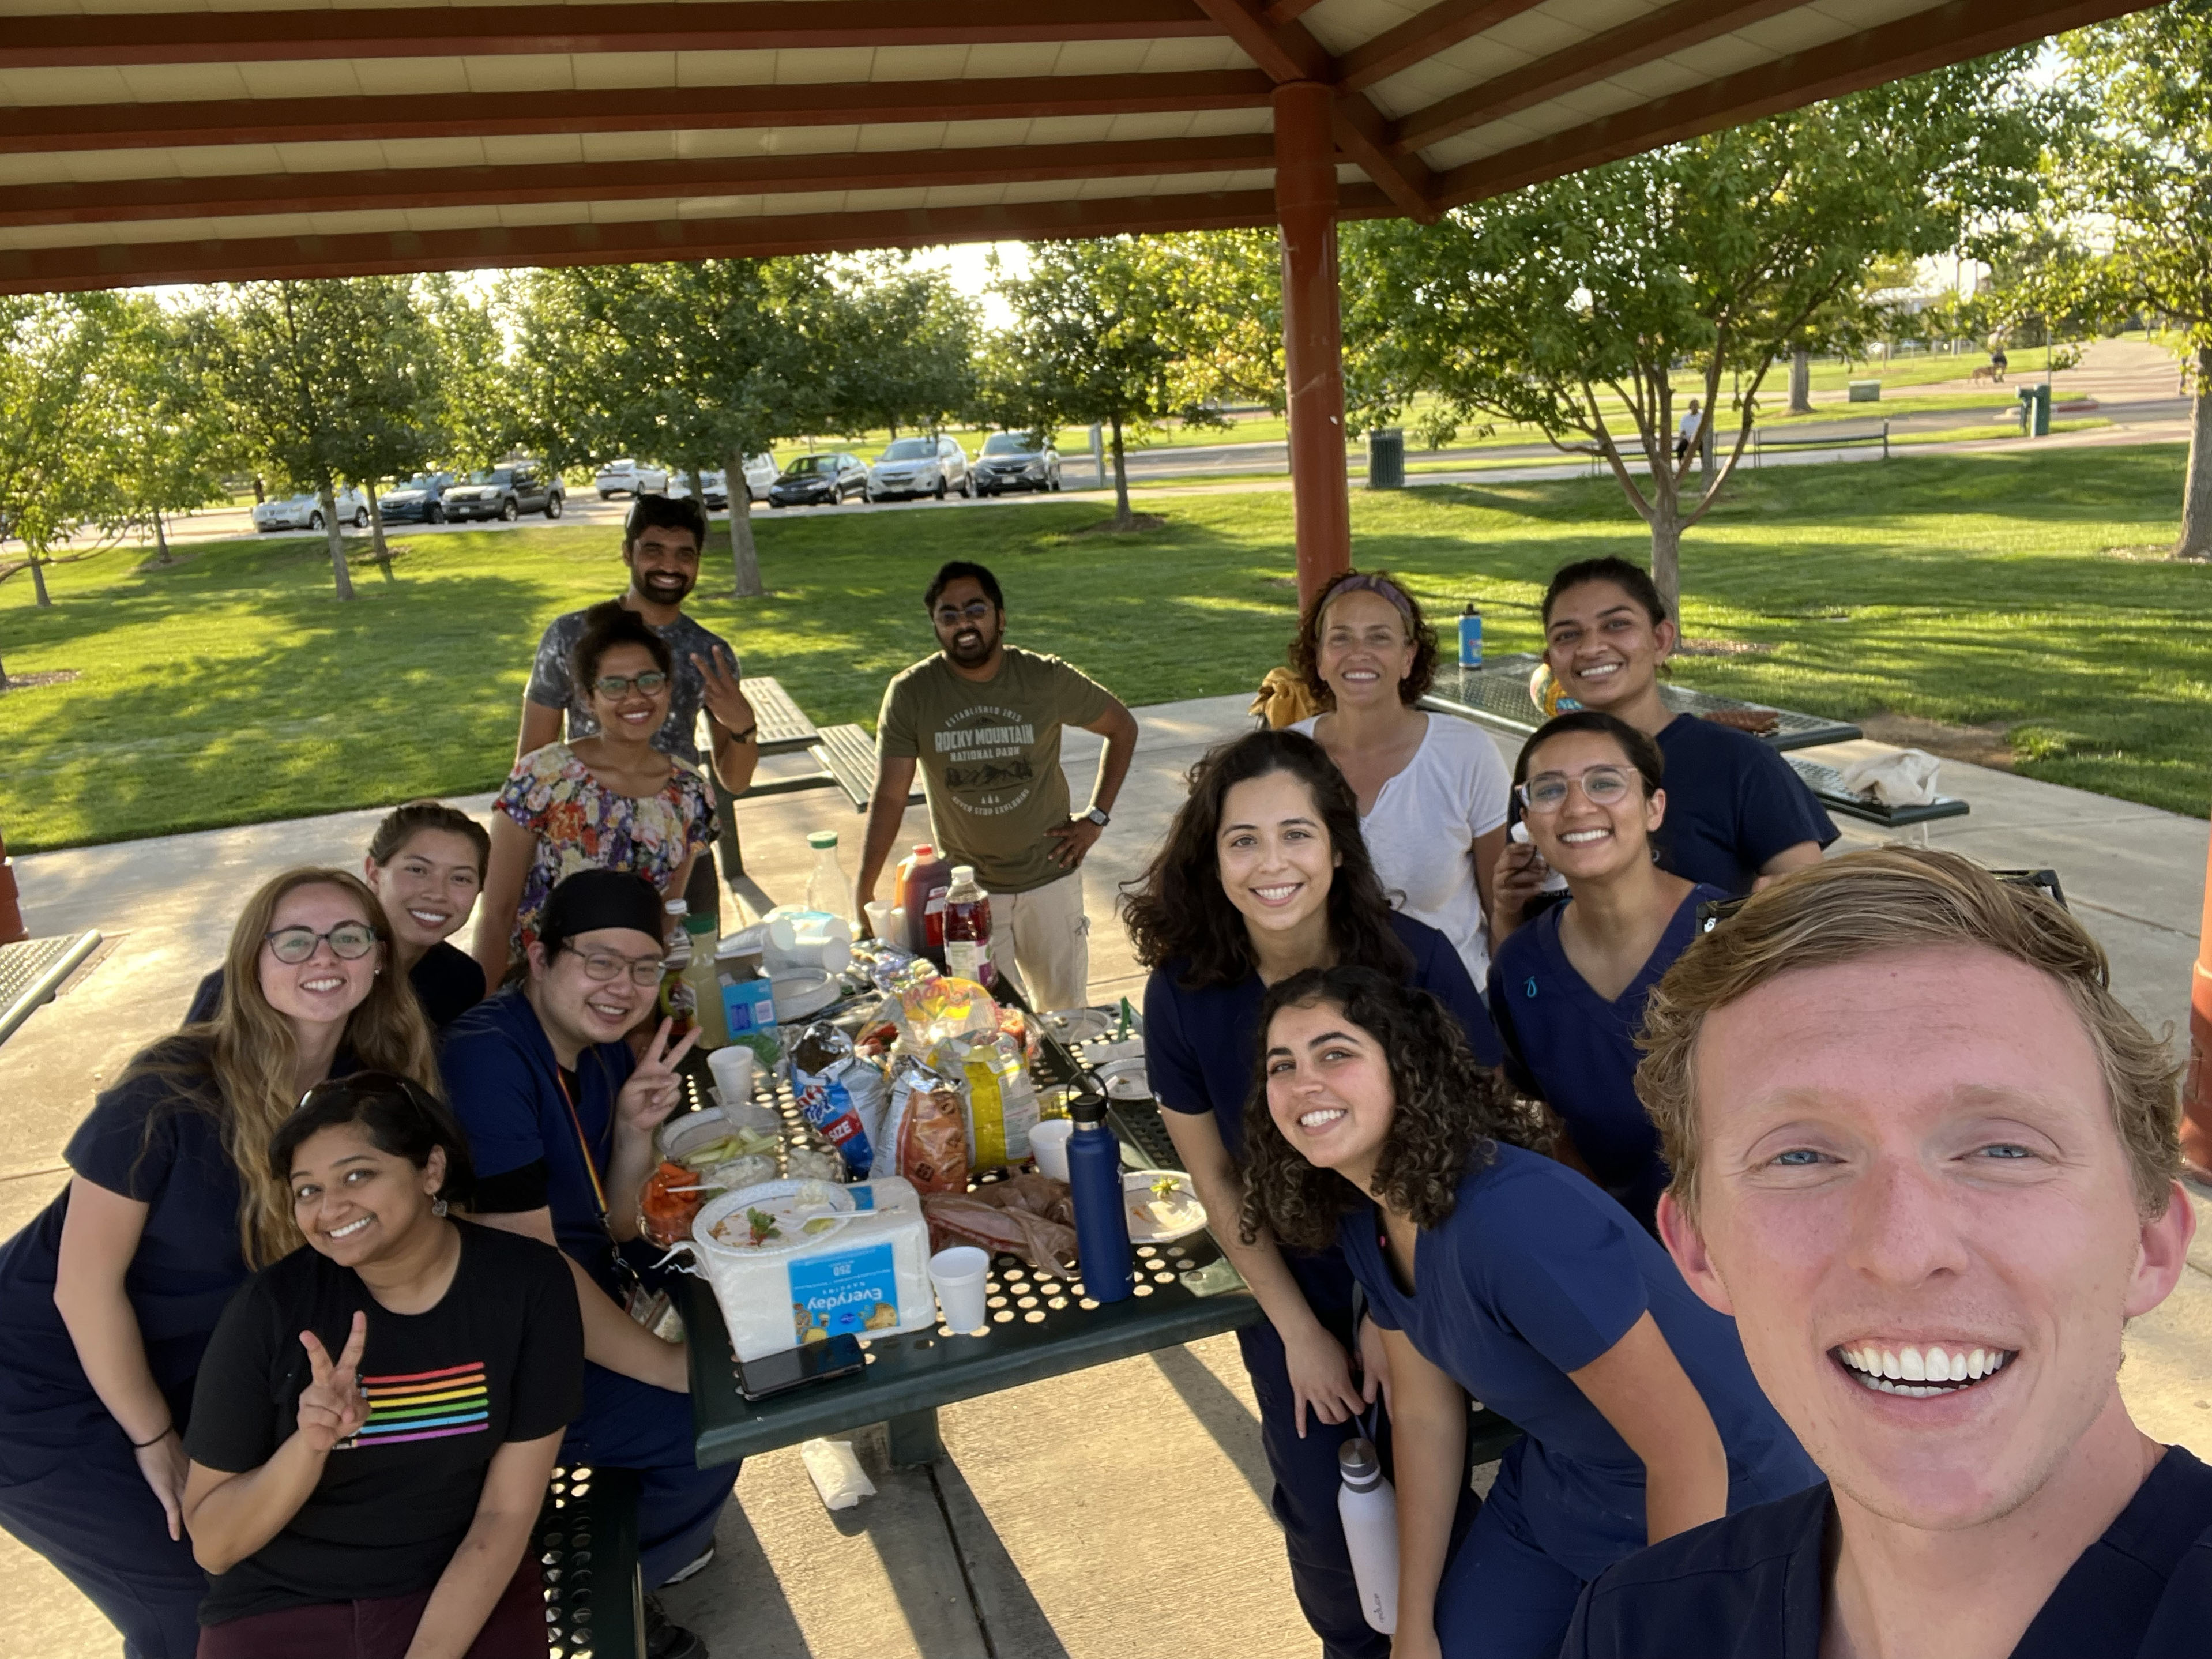 CU Dental Students at picnic event